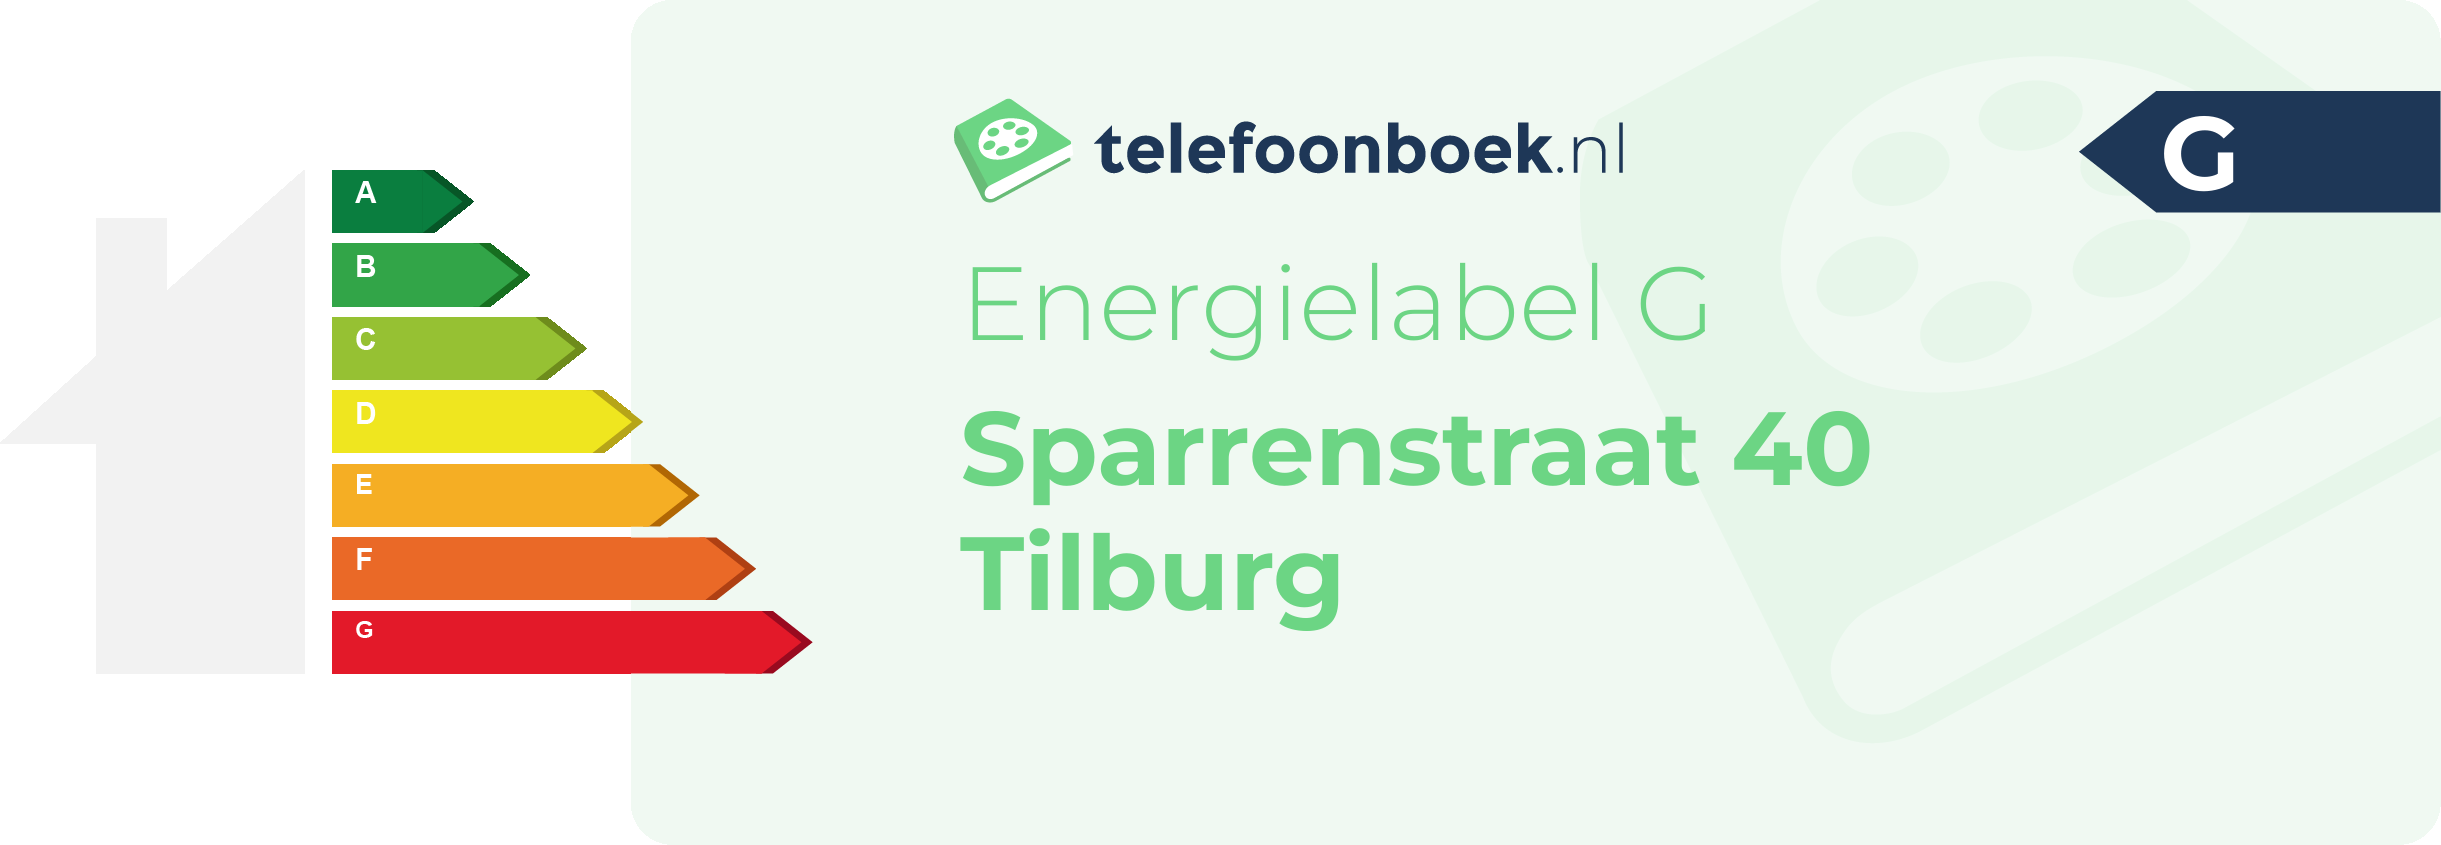 Energielabel Sparrenstraat 40 Tilburg